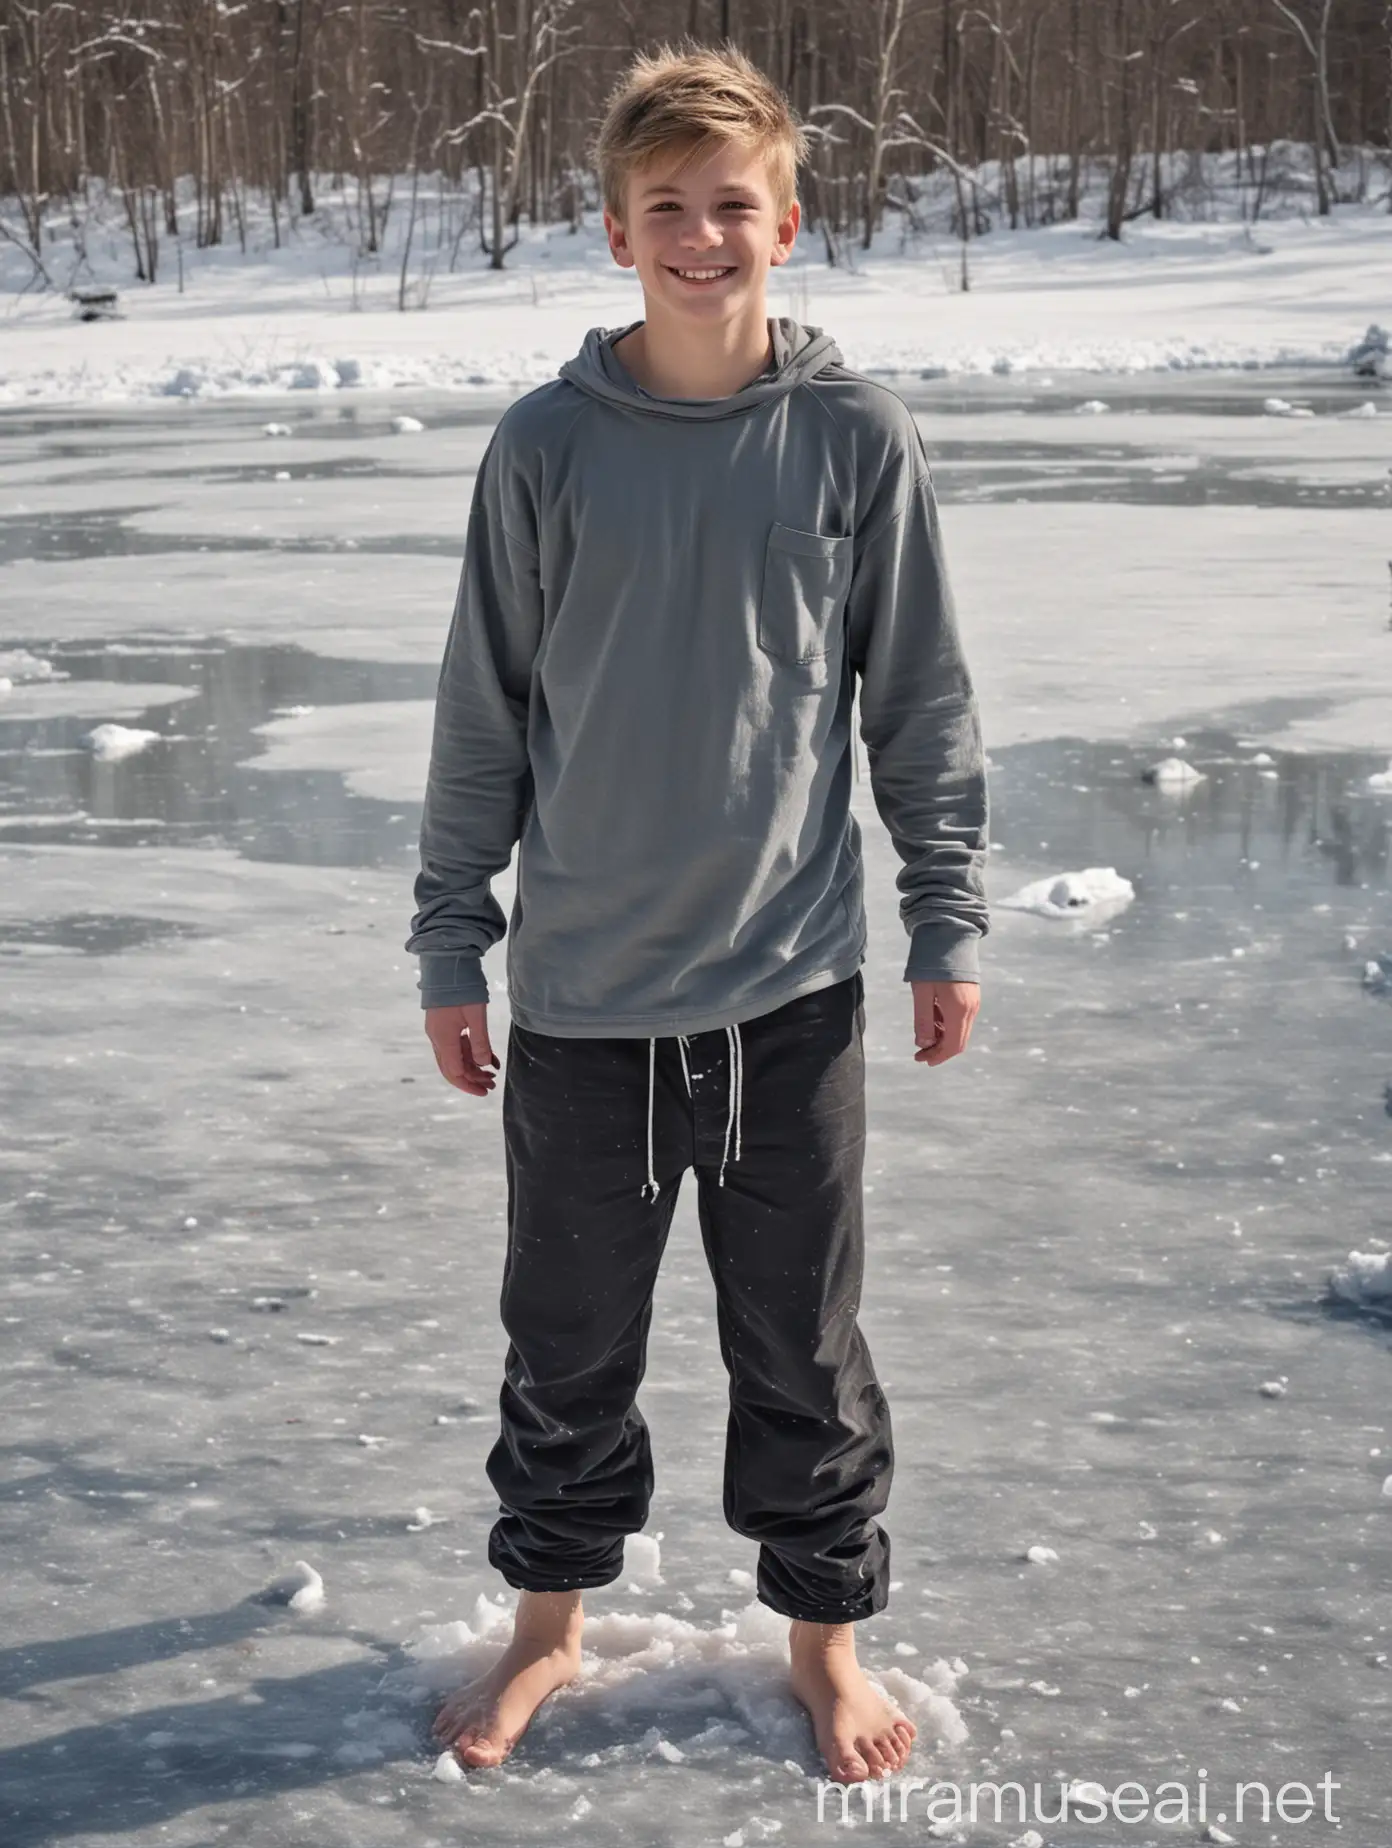 Smiling Barefoot Teen Boy in Snowy Forest Landscape